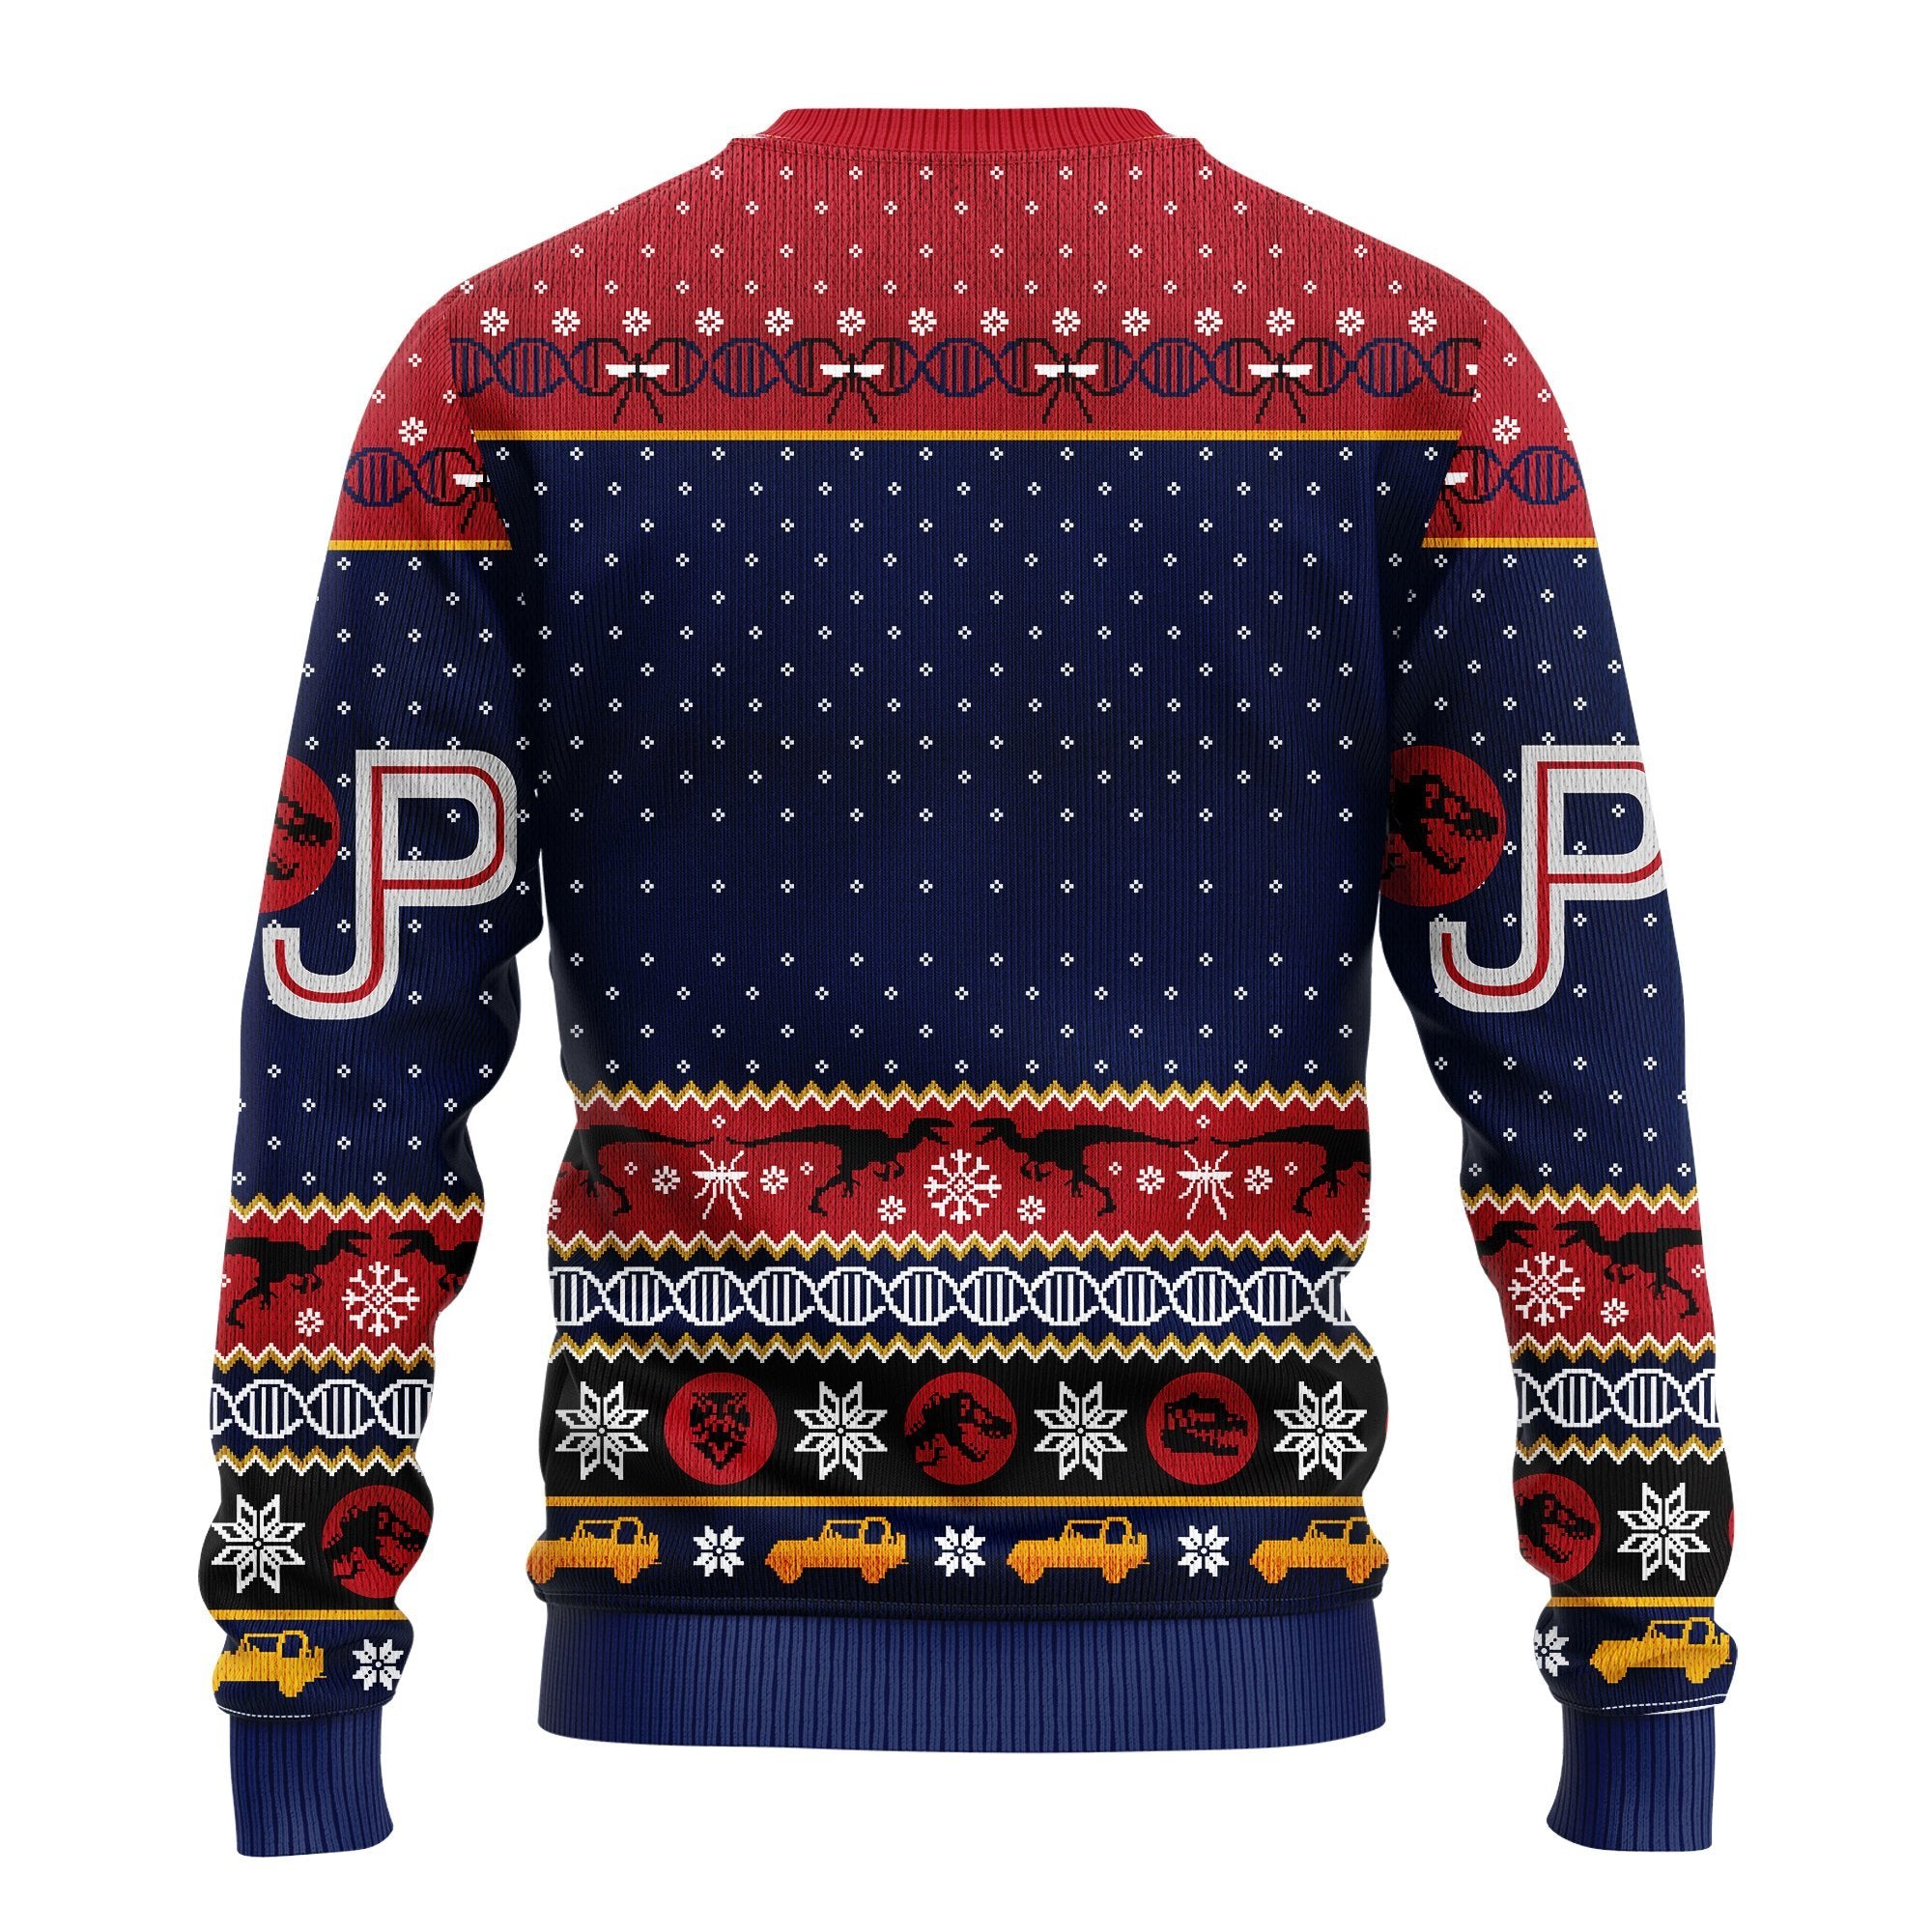 Jurrasic Park Ugly Christmas Sweater Amazing Gift Idea Thanksgiving Gift